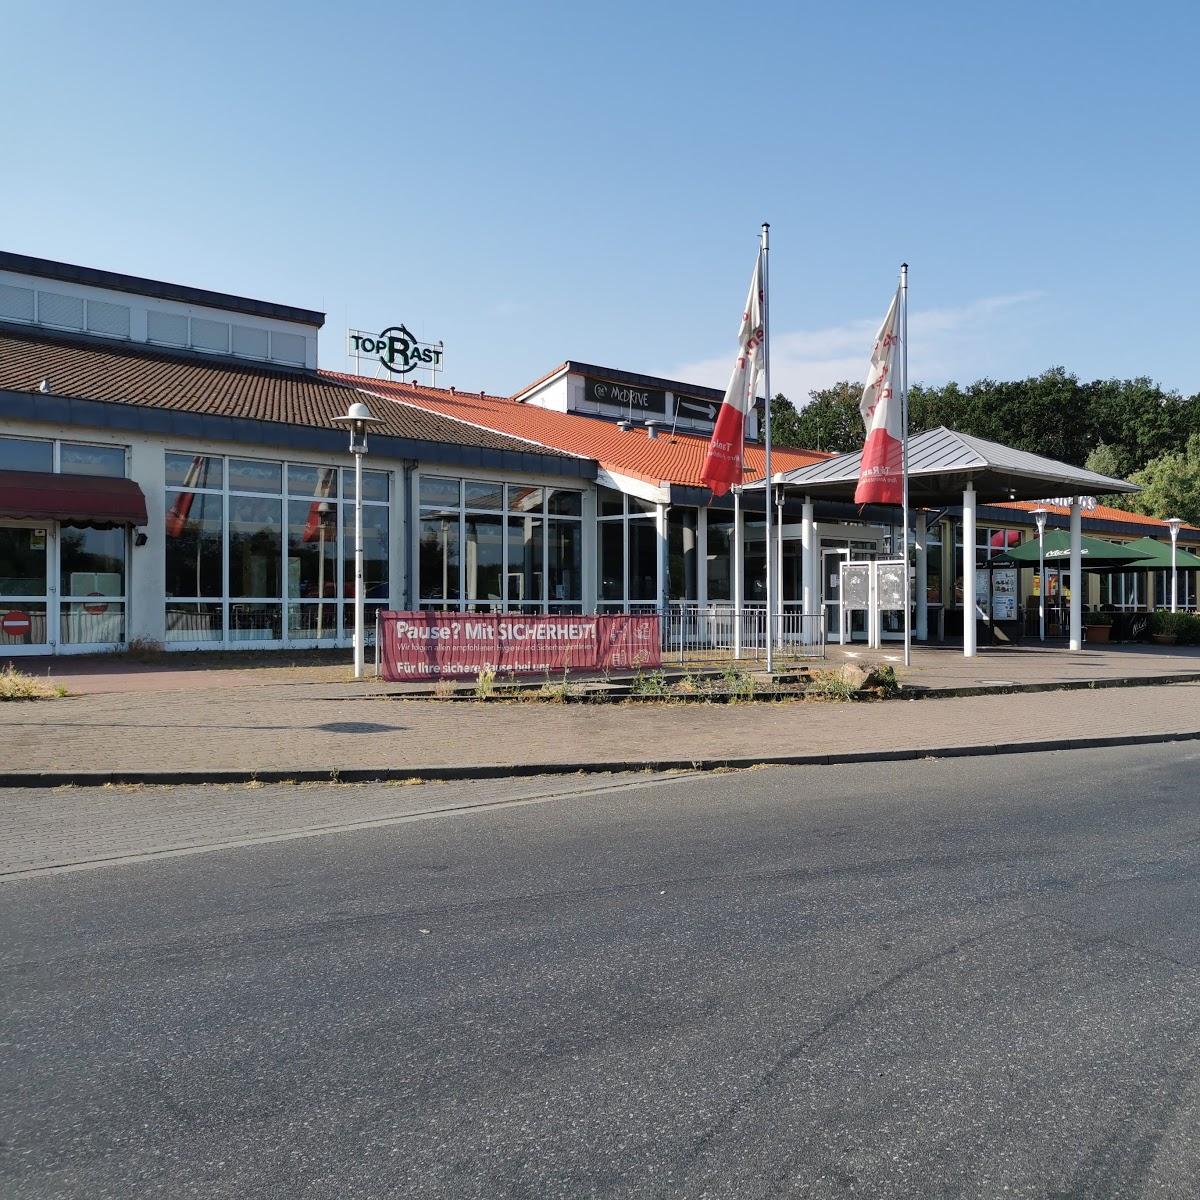 Restaurant "Tank & Rast Raststätte Linumer Bruch Süd" in Fehrbellin